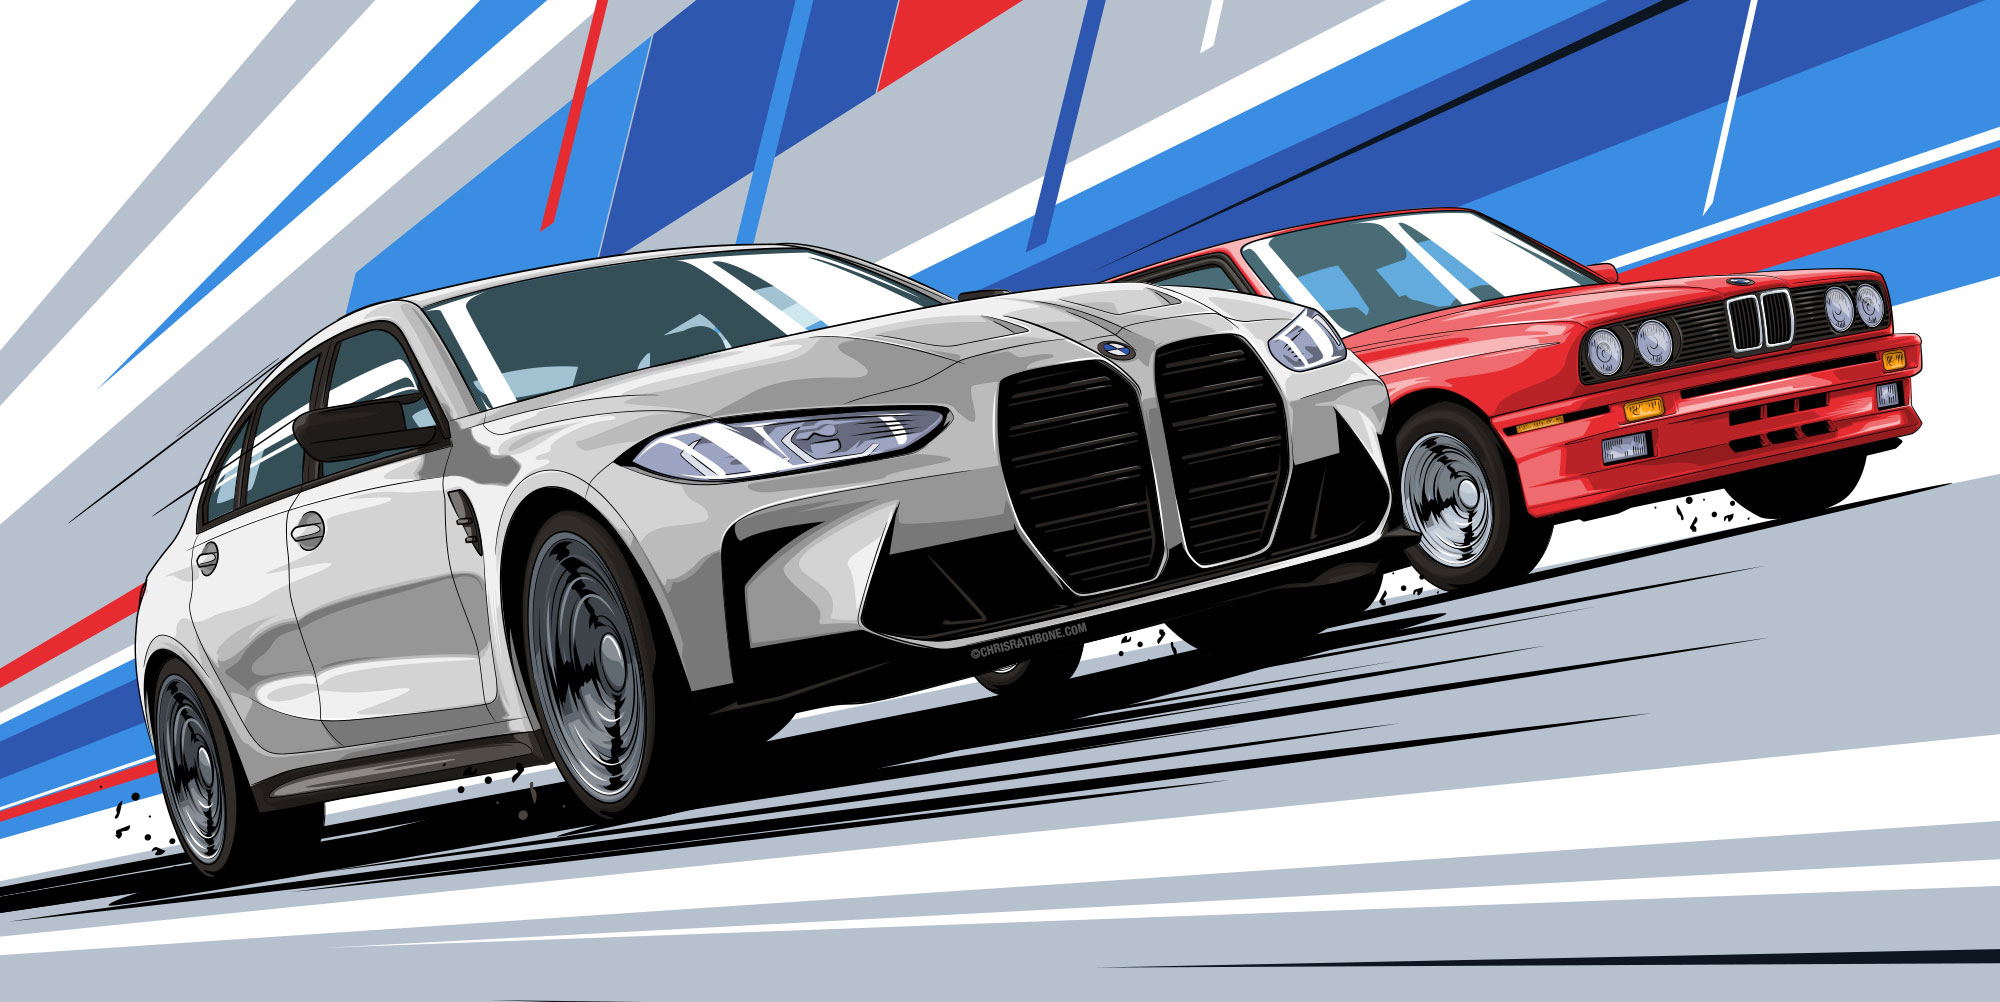 Sports & Automotive illustration by Chris Rathbone